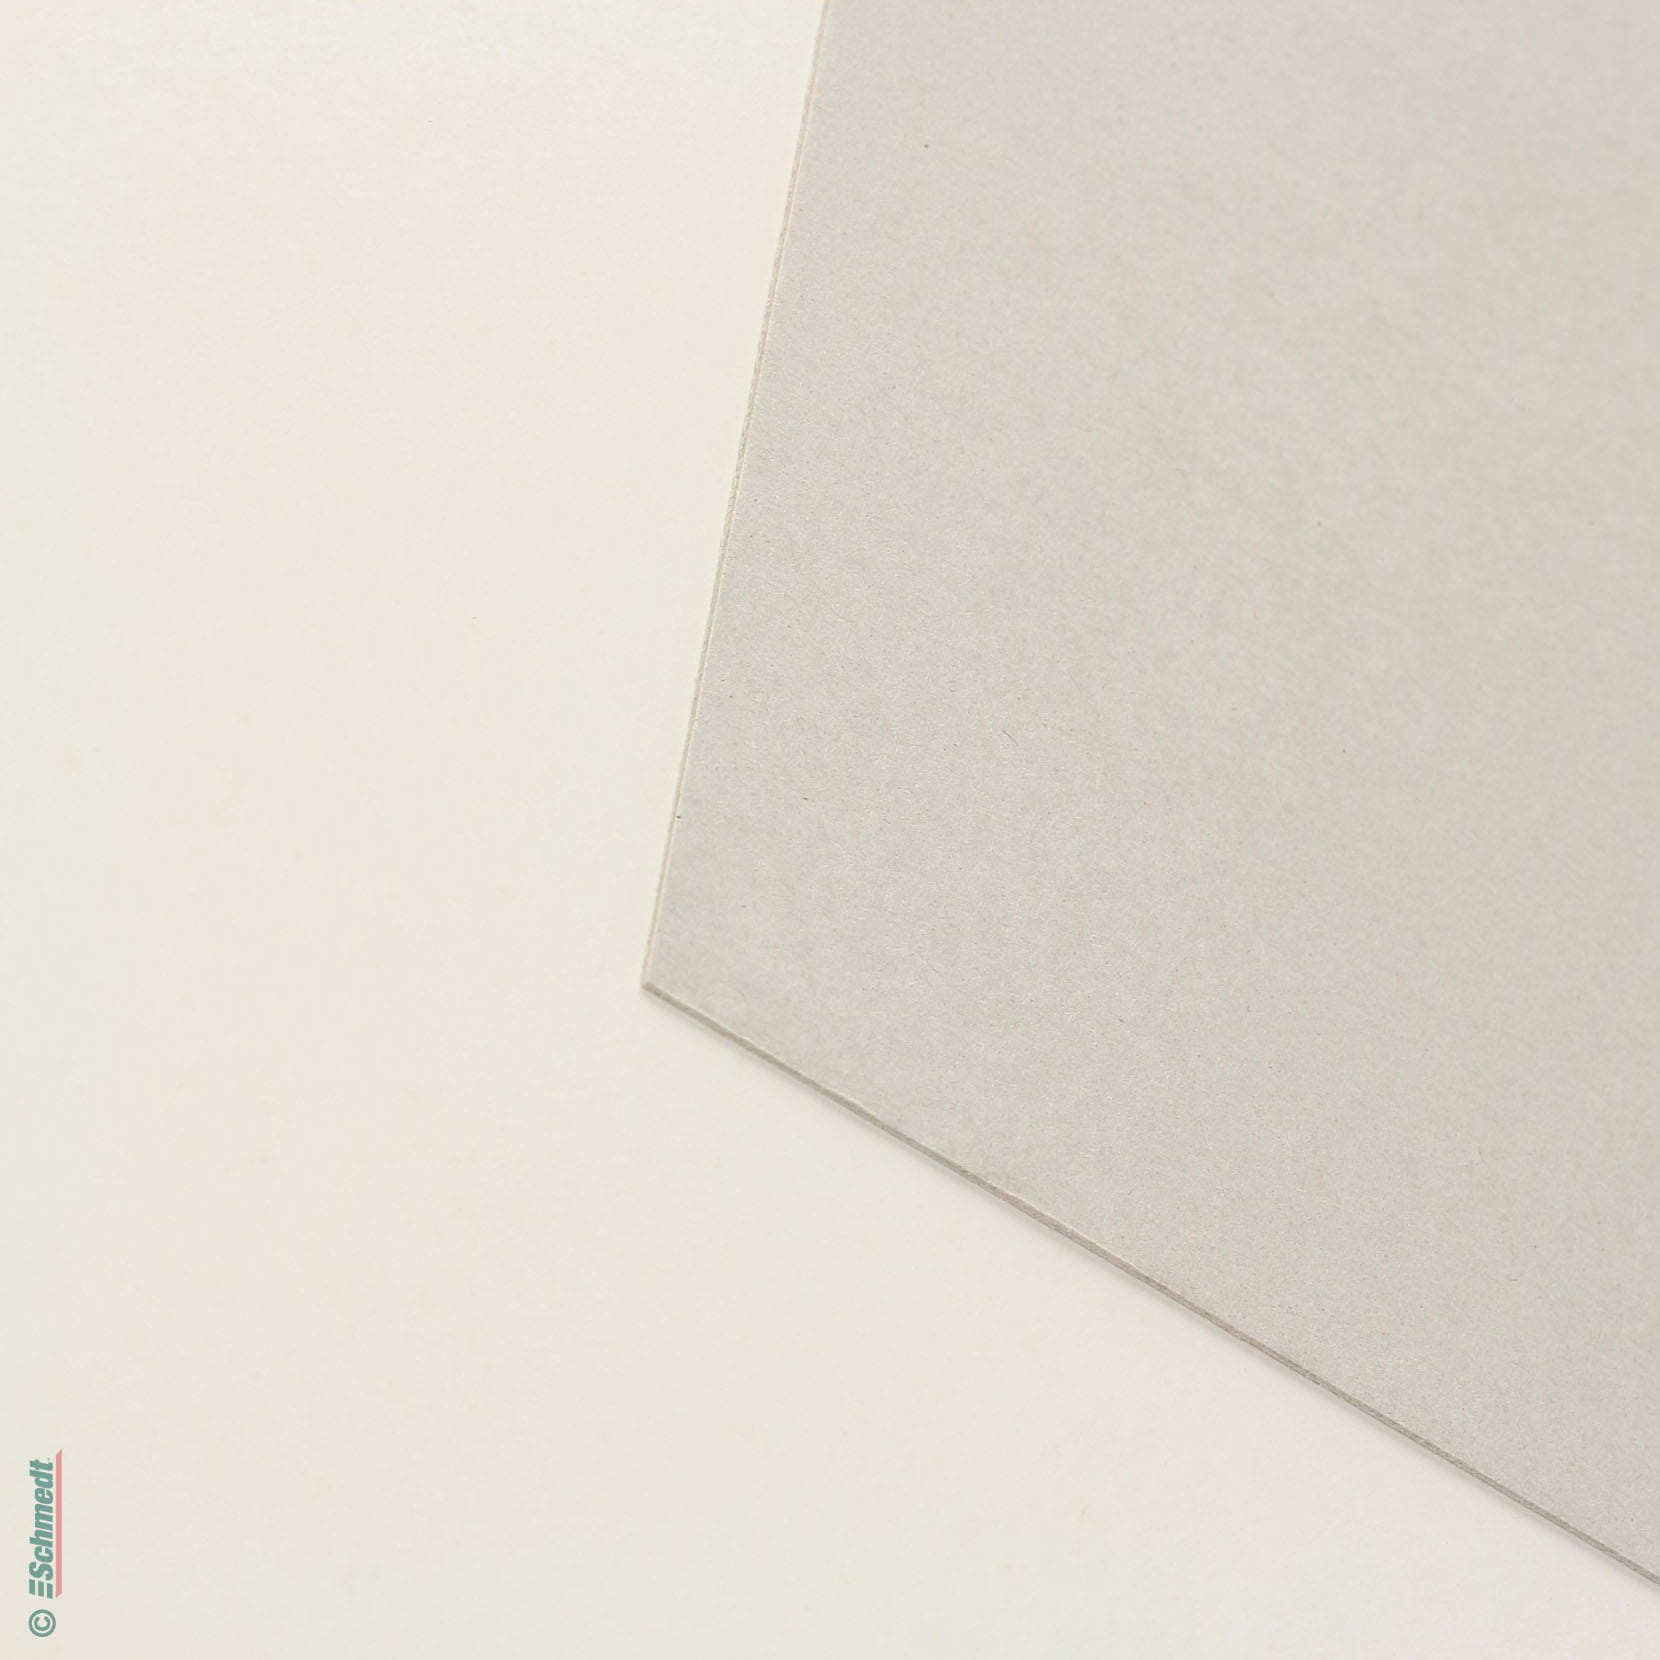 DIN A4, 300g/m² - (50 feuilles) Emballage papier cartonné